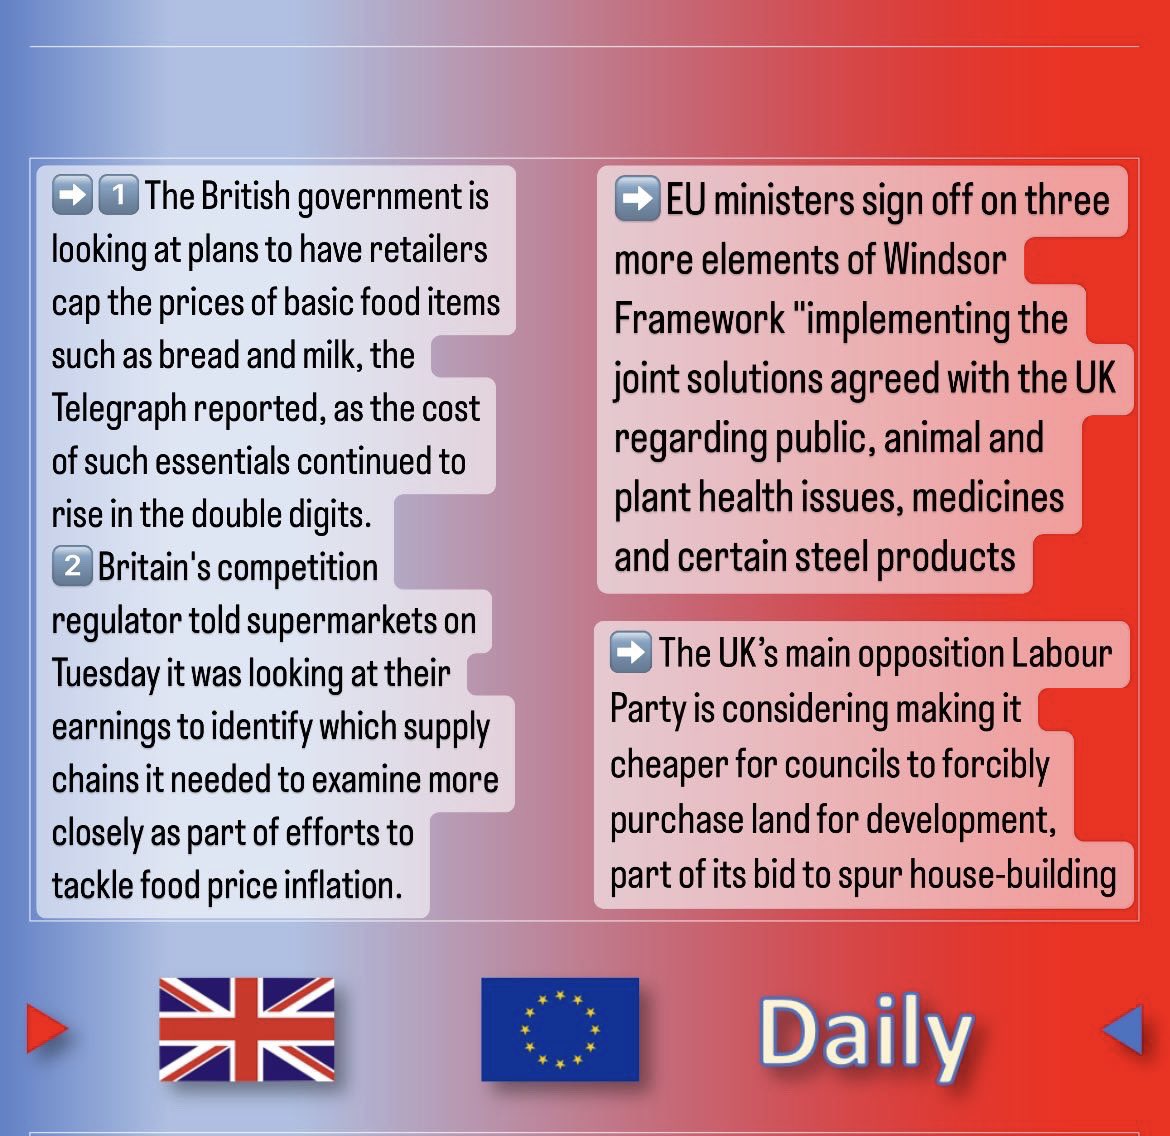 #Brexit daily #BrexitNews day 8️⃣7️⃣7️⃣  #NorthernIreland  #supplychain #business #logistics #Logistik #trade #export #import #customs #Finance #motionfinity #finances #financialservices  #GDP #ukca #WindsorFramework
gov.uk/government/new…